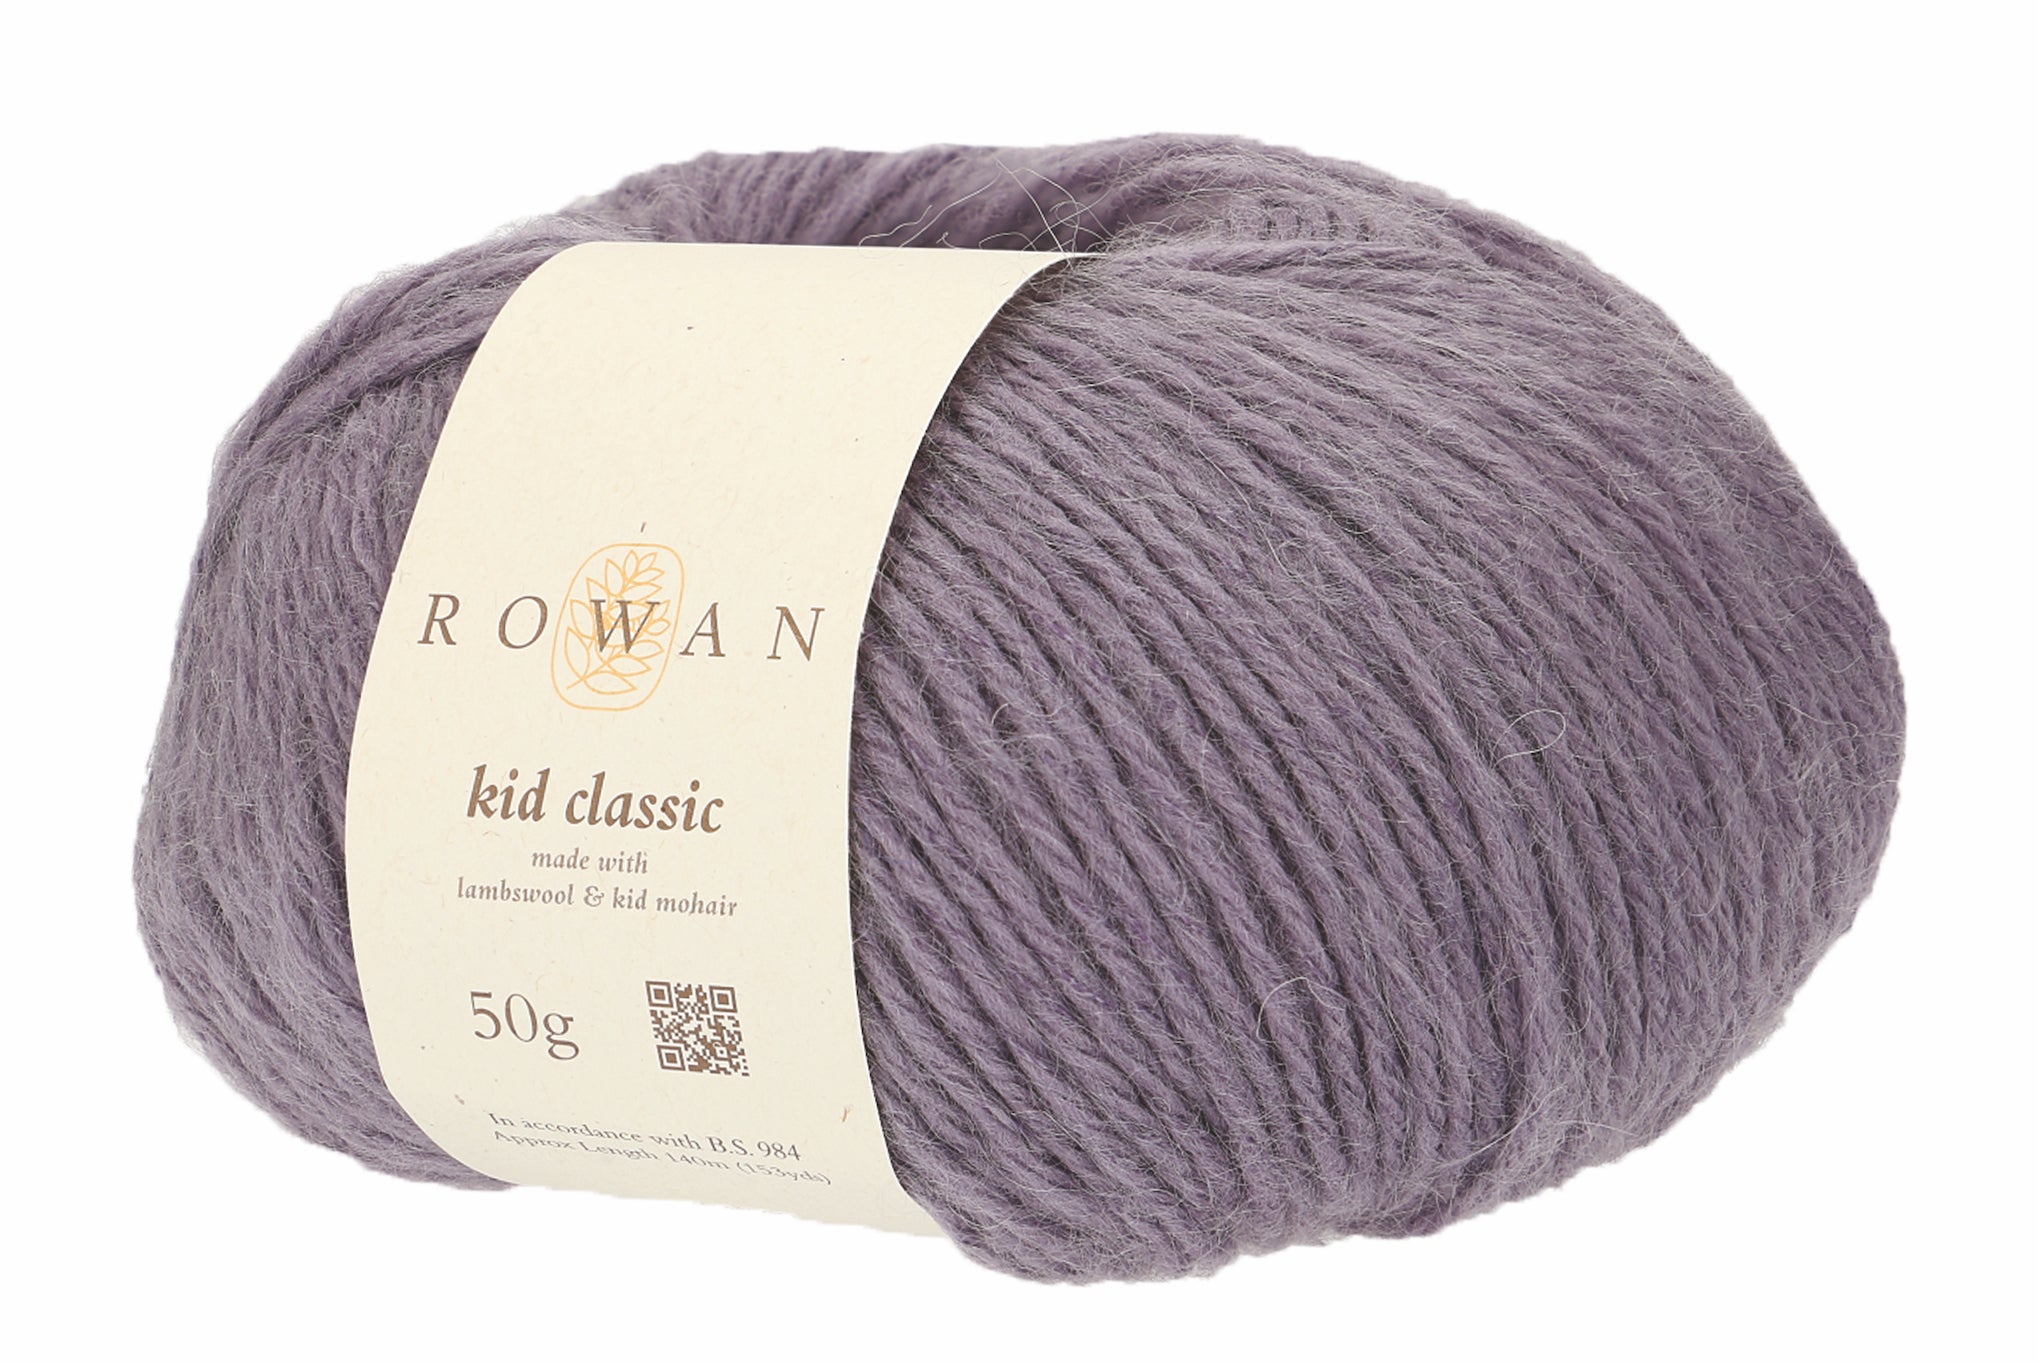 Rowan Kid Classic in Lavender-897